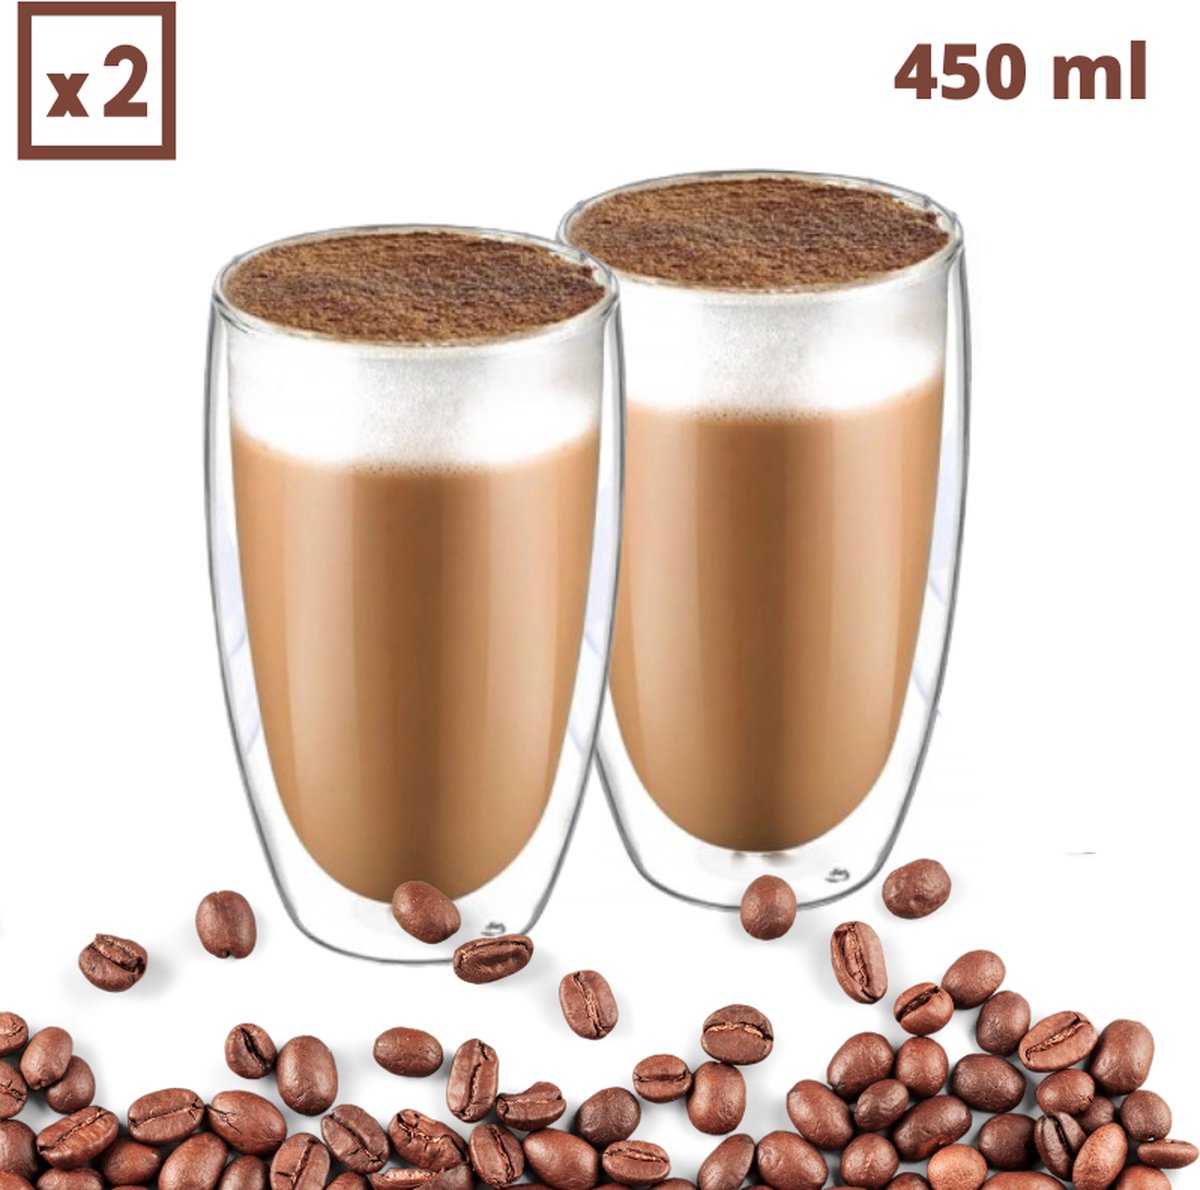 Chimneys Blend - Dubbelwandige Koffieglazen 450ml - Latte Macchiato Glazen - Cappuccino Glazen - Latte Macchiato Glazen Dubbelwandig - Latte Glazen - Koffieglazen - 450 ml - 2 Stuks – Handgemaakt